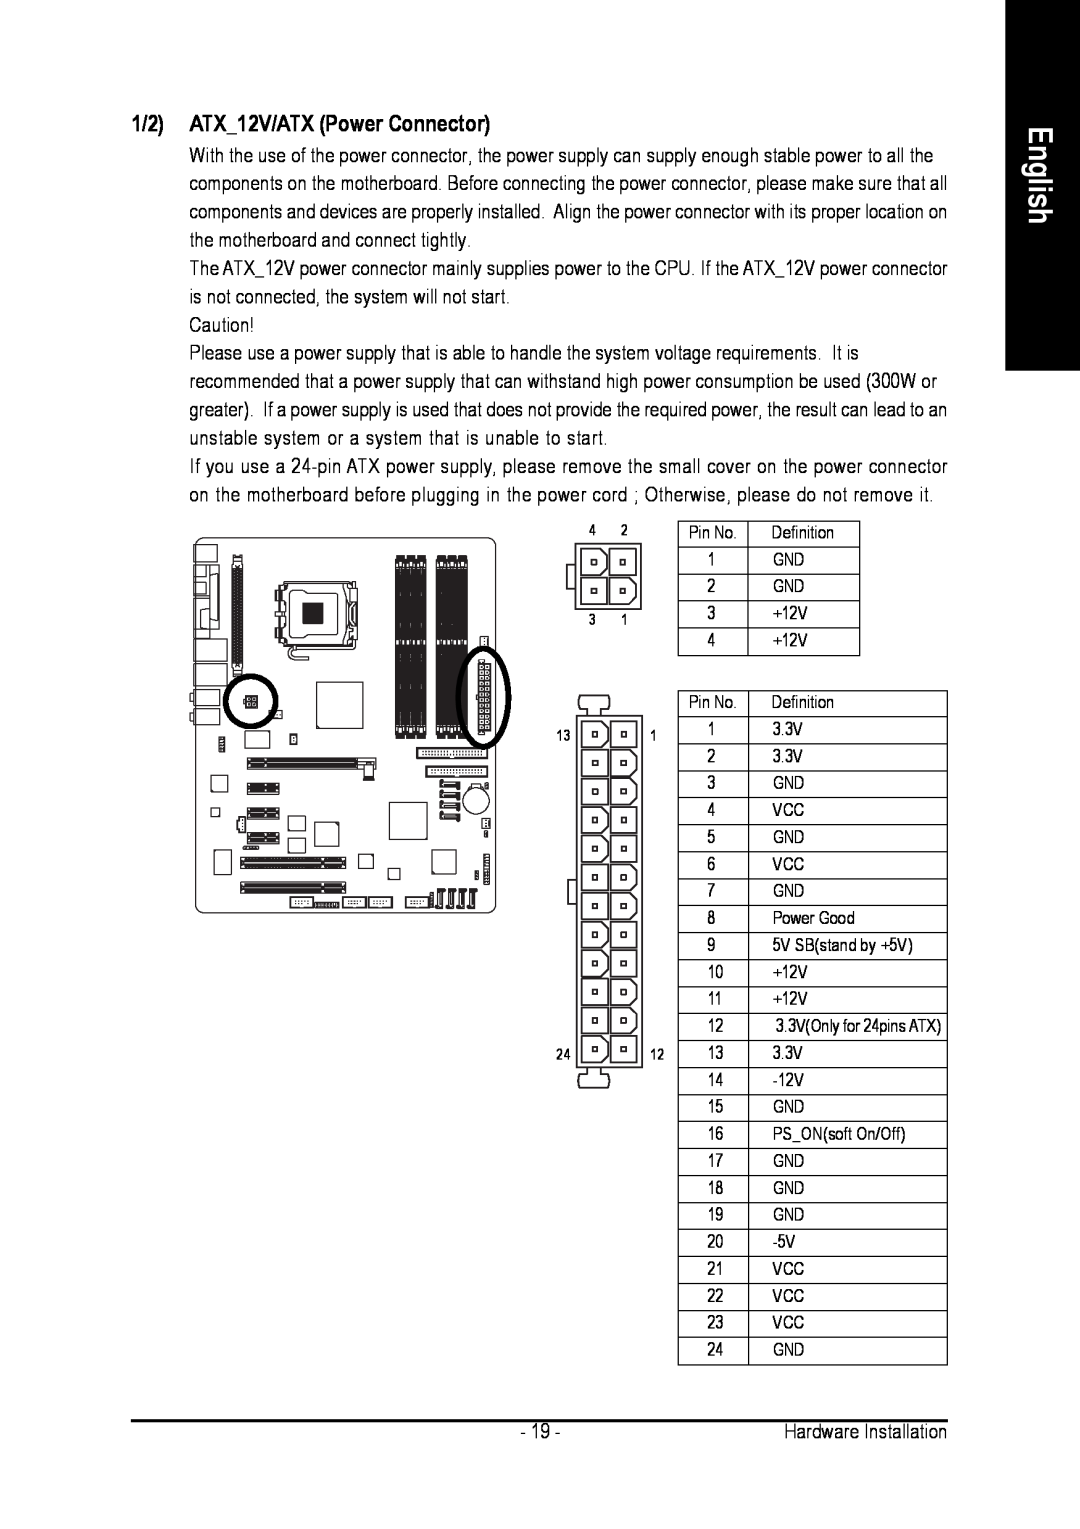 Gigabyte GA-8AENXP-D user manual 1/2 ATX12V/ATX Power Connector, English 